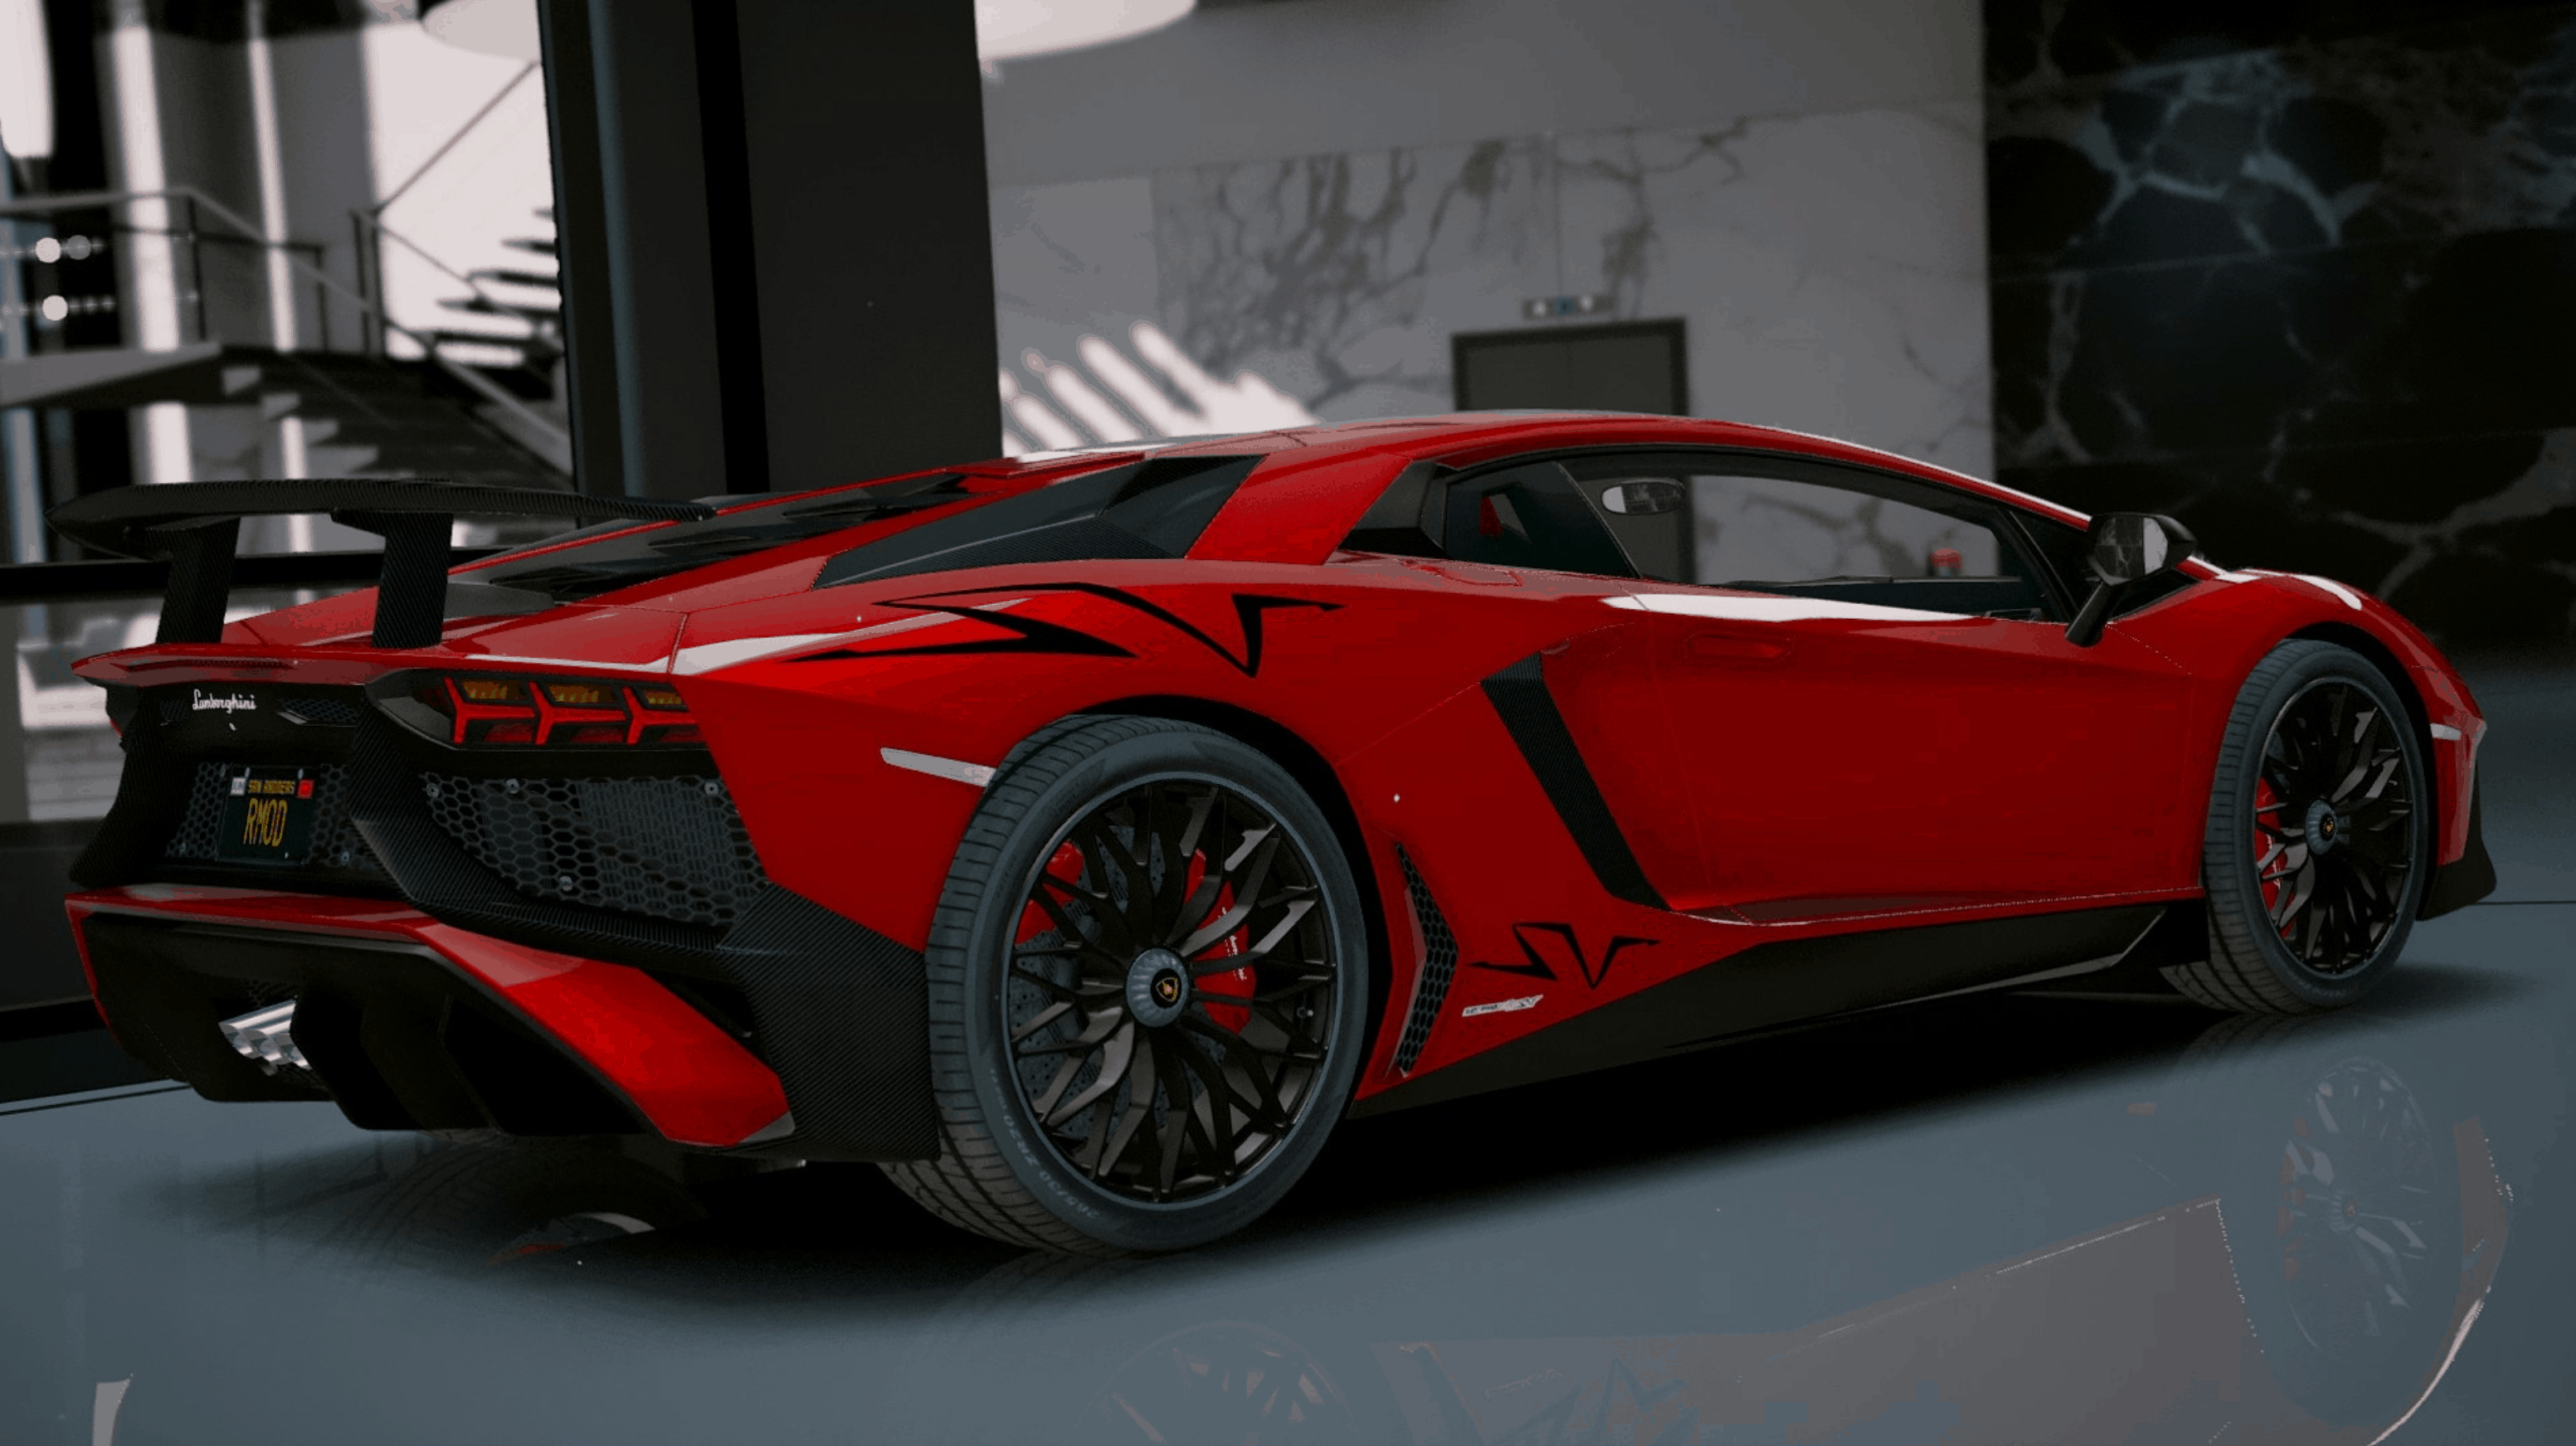 Lamborghini Aventador LP 750-4 SV 2015 1.2 - GTA 5 Mod | Grand Theft